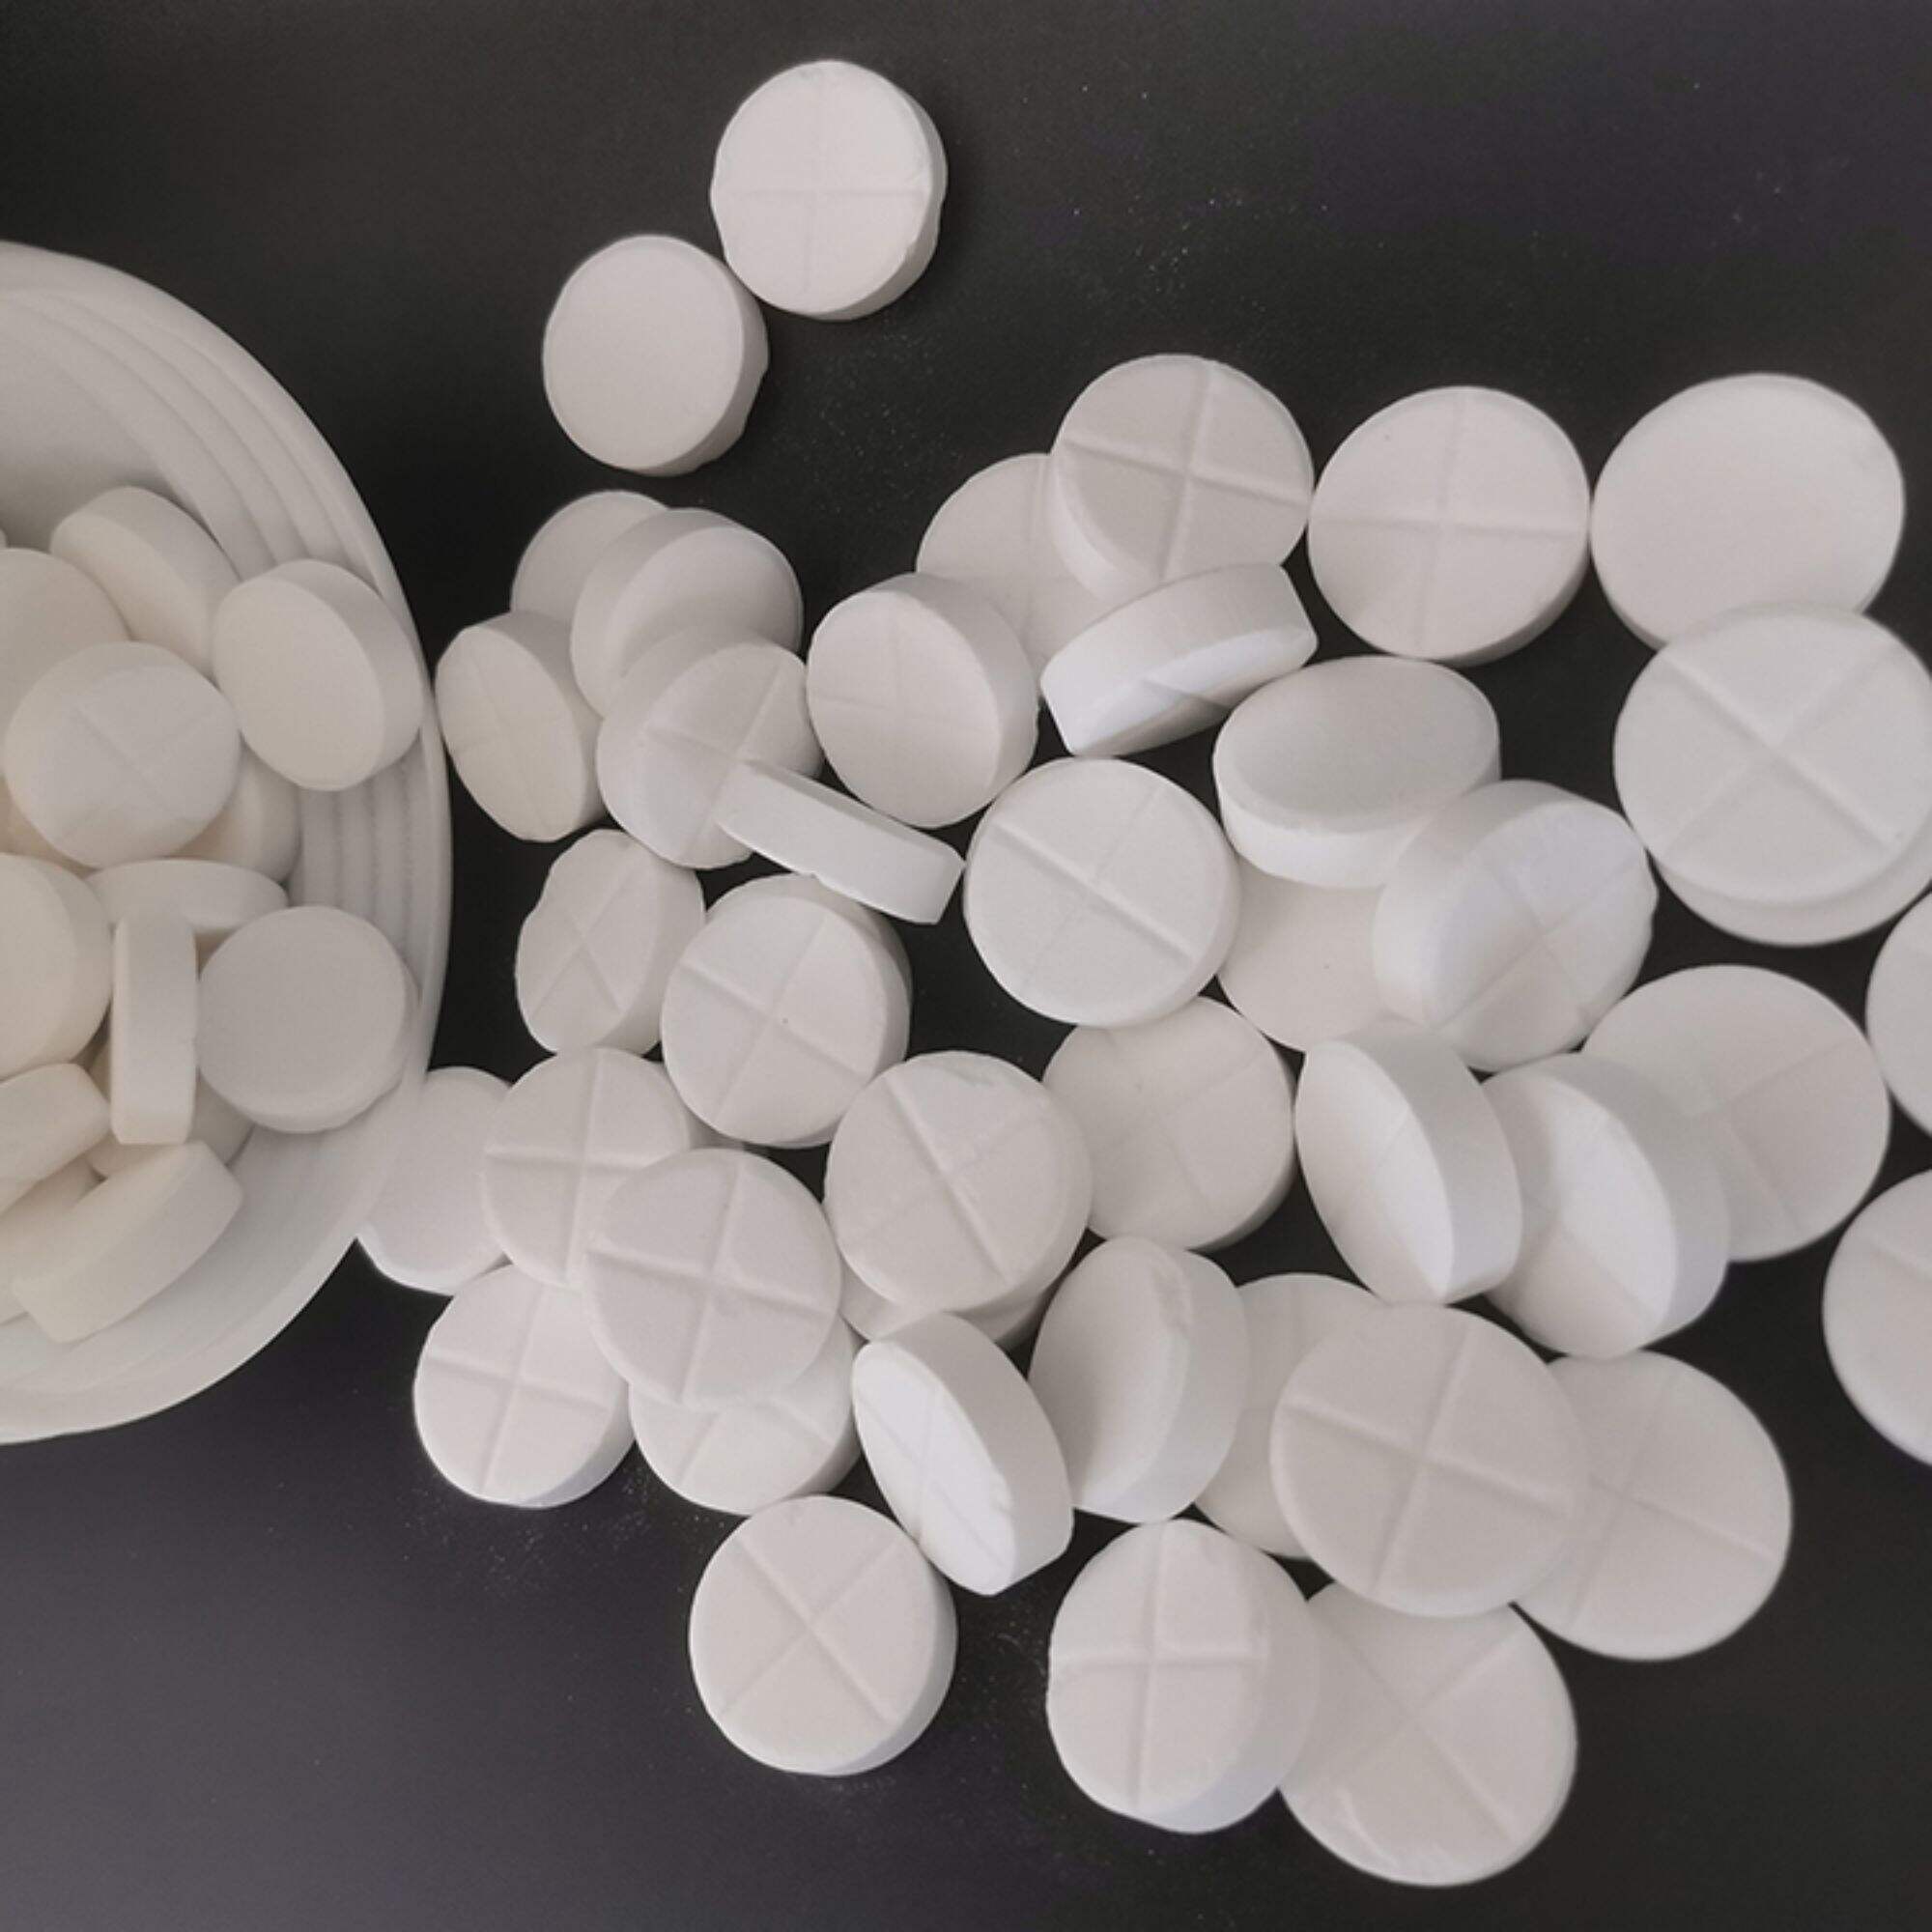 3.3 g musujące tabletki z chlorem do basenu SDIC Dichloroizocyjanuran sodu